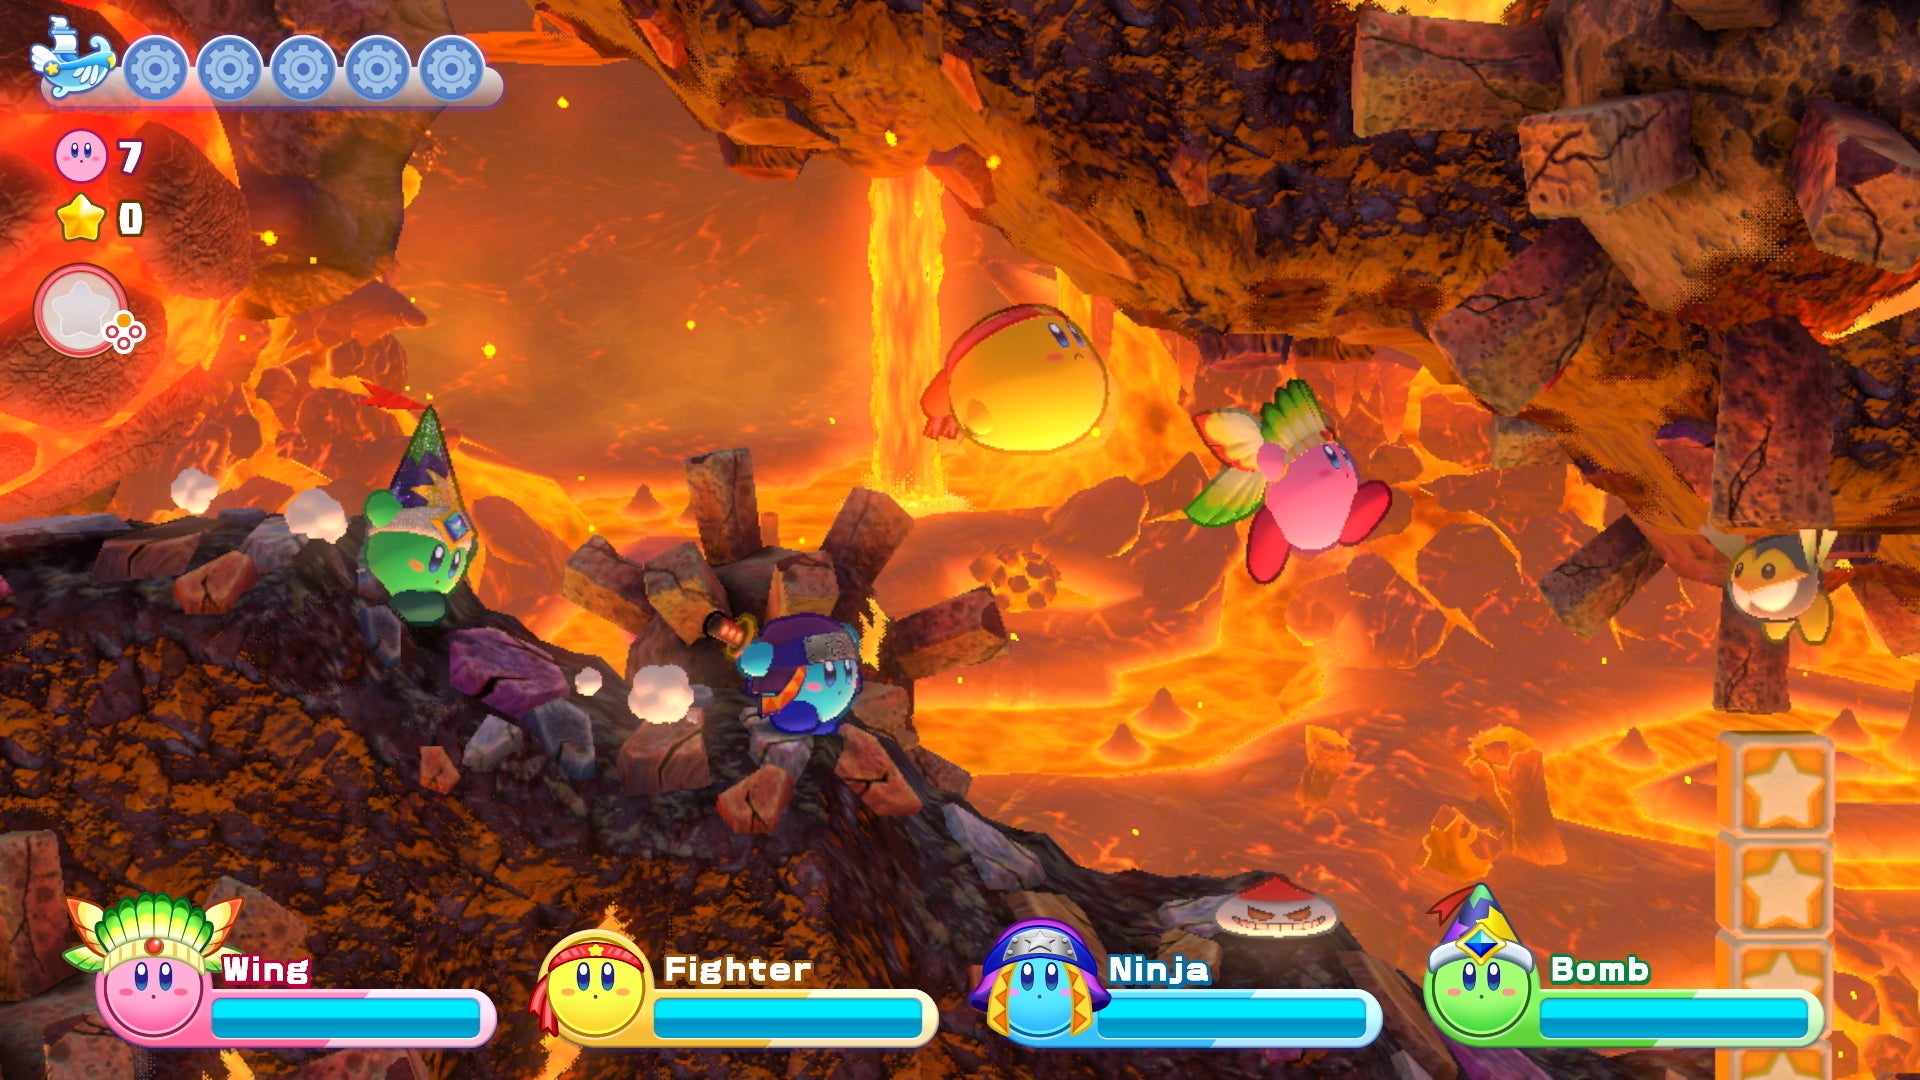 Kirbys Rückkehr ins Traumland Deluxe